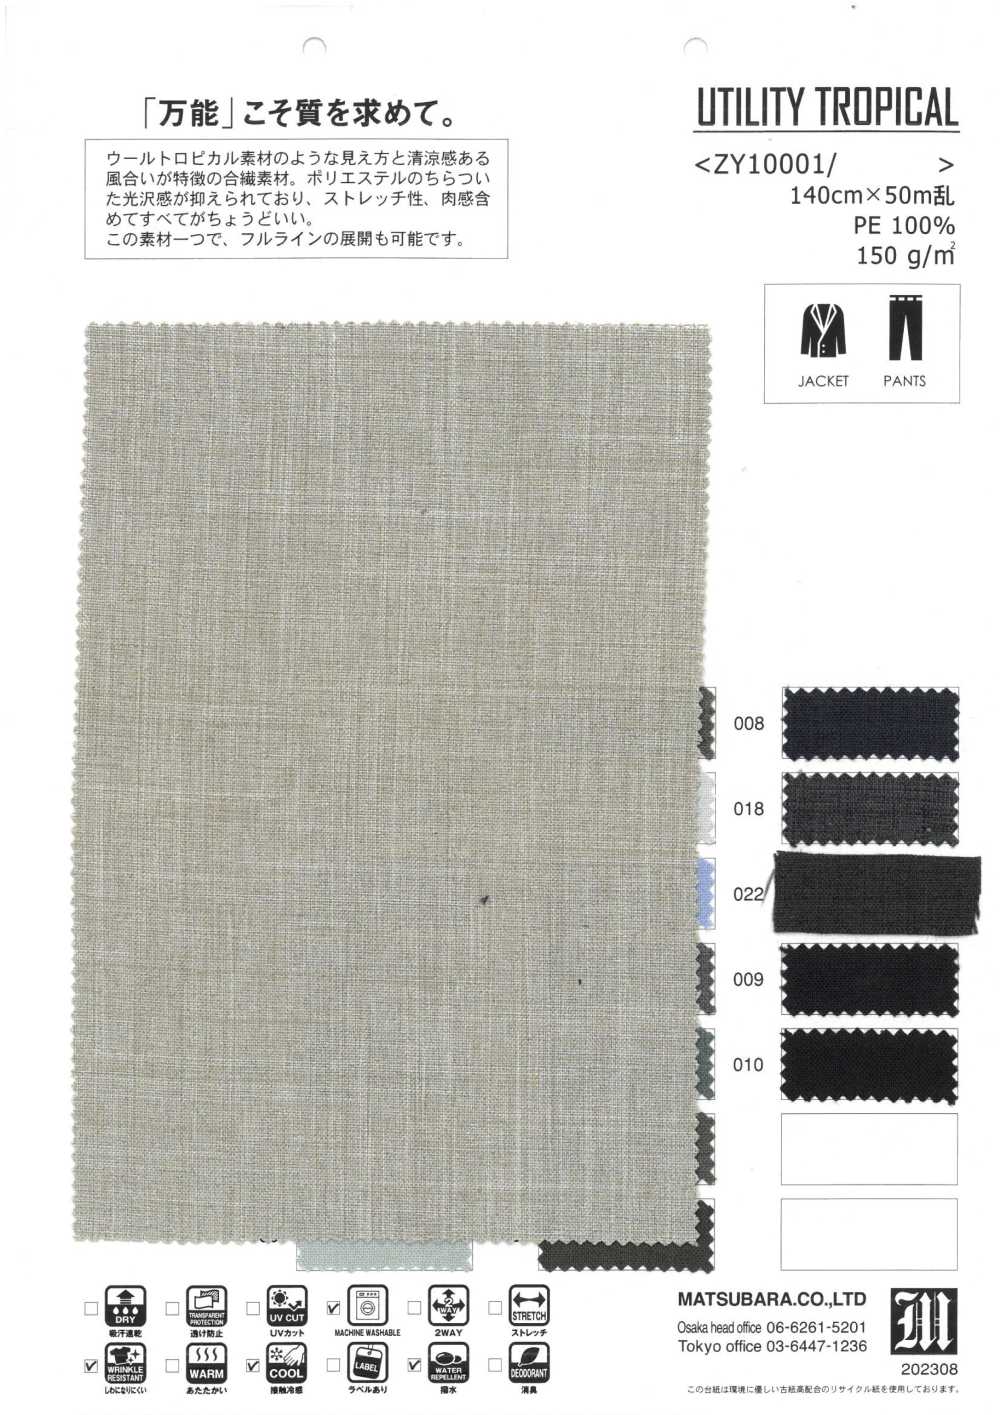 ZY10001 UTILITY TROPICAL[Textile / Fabric] Matsubara